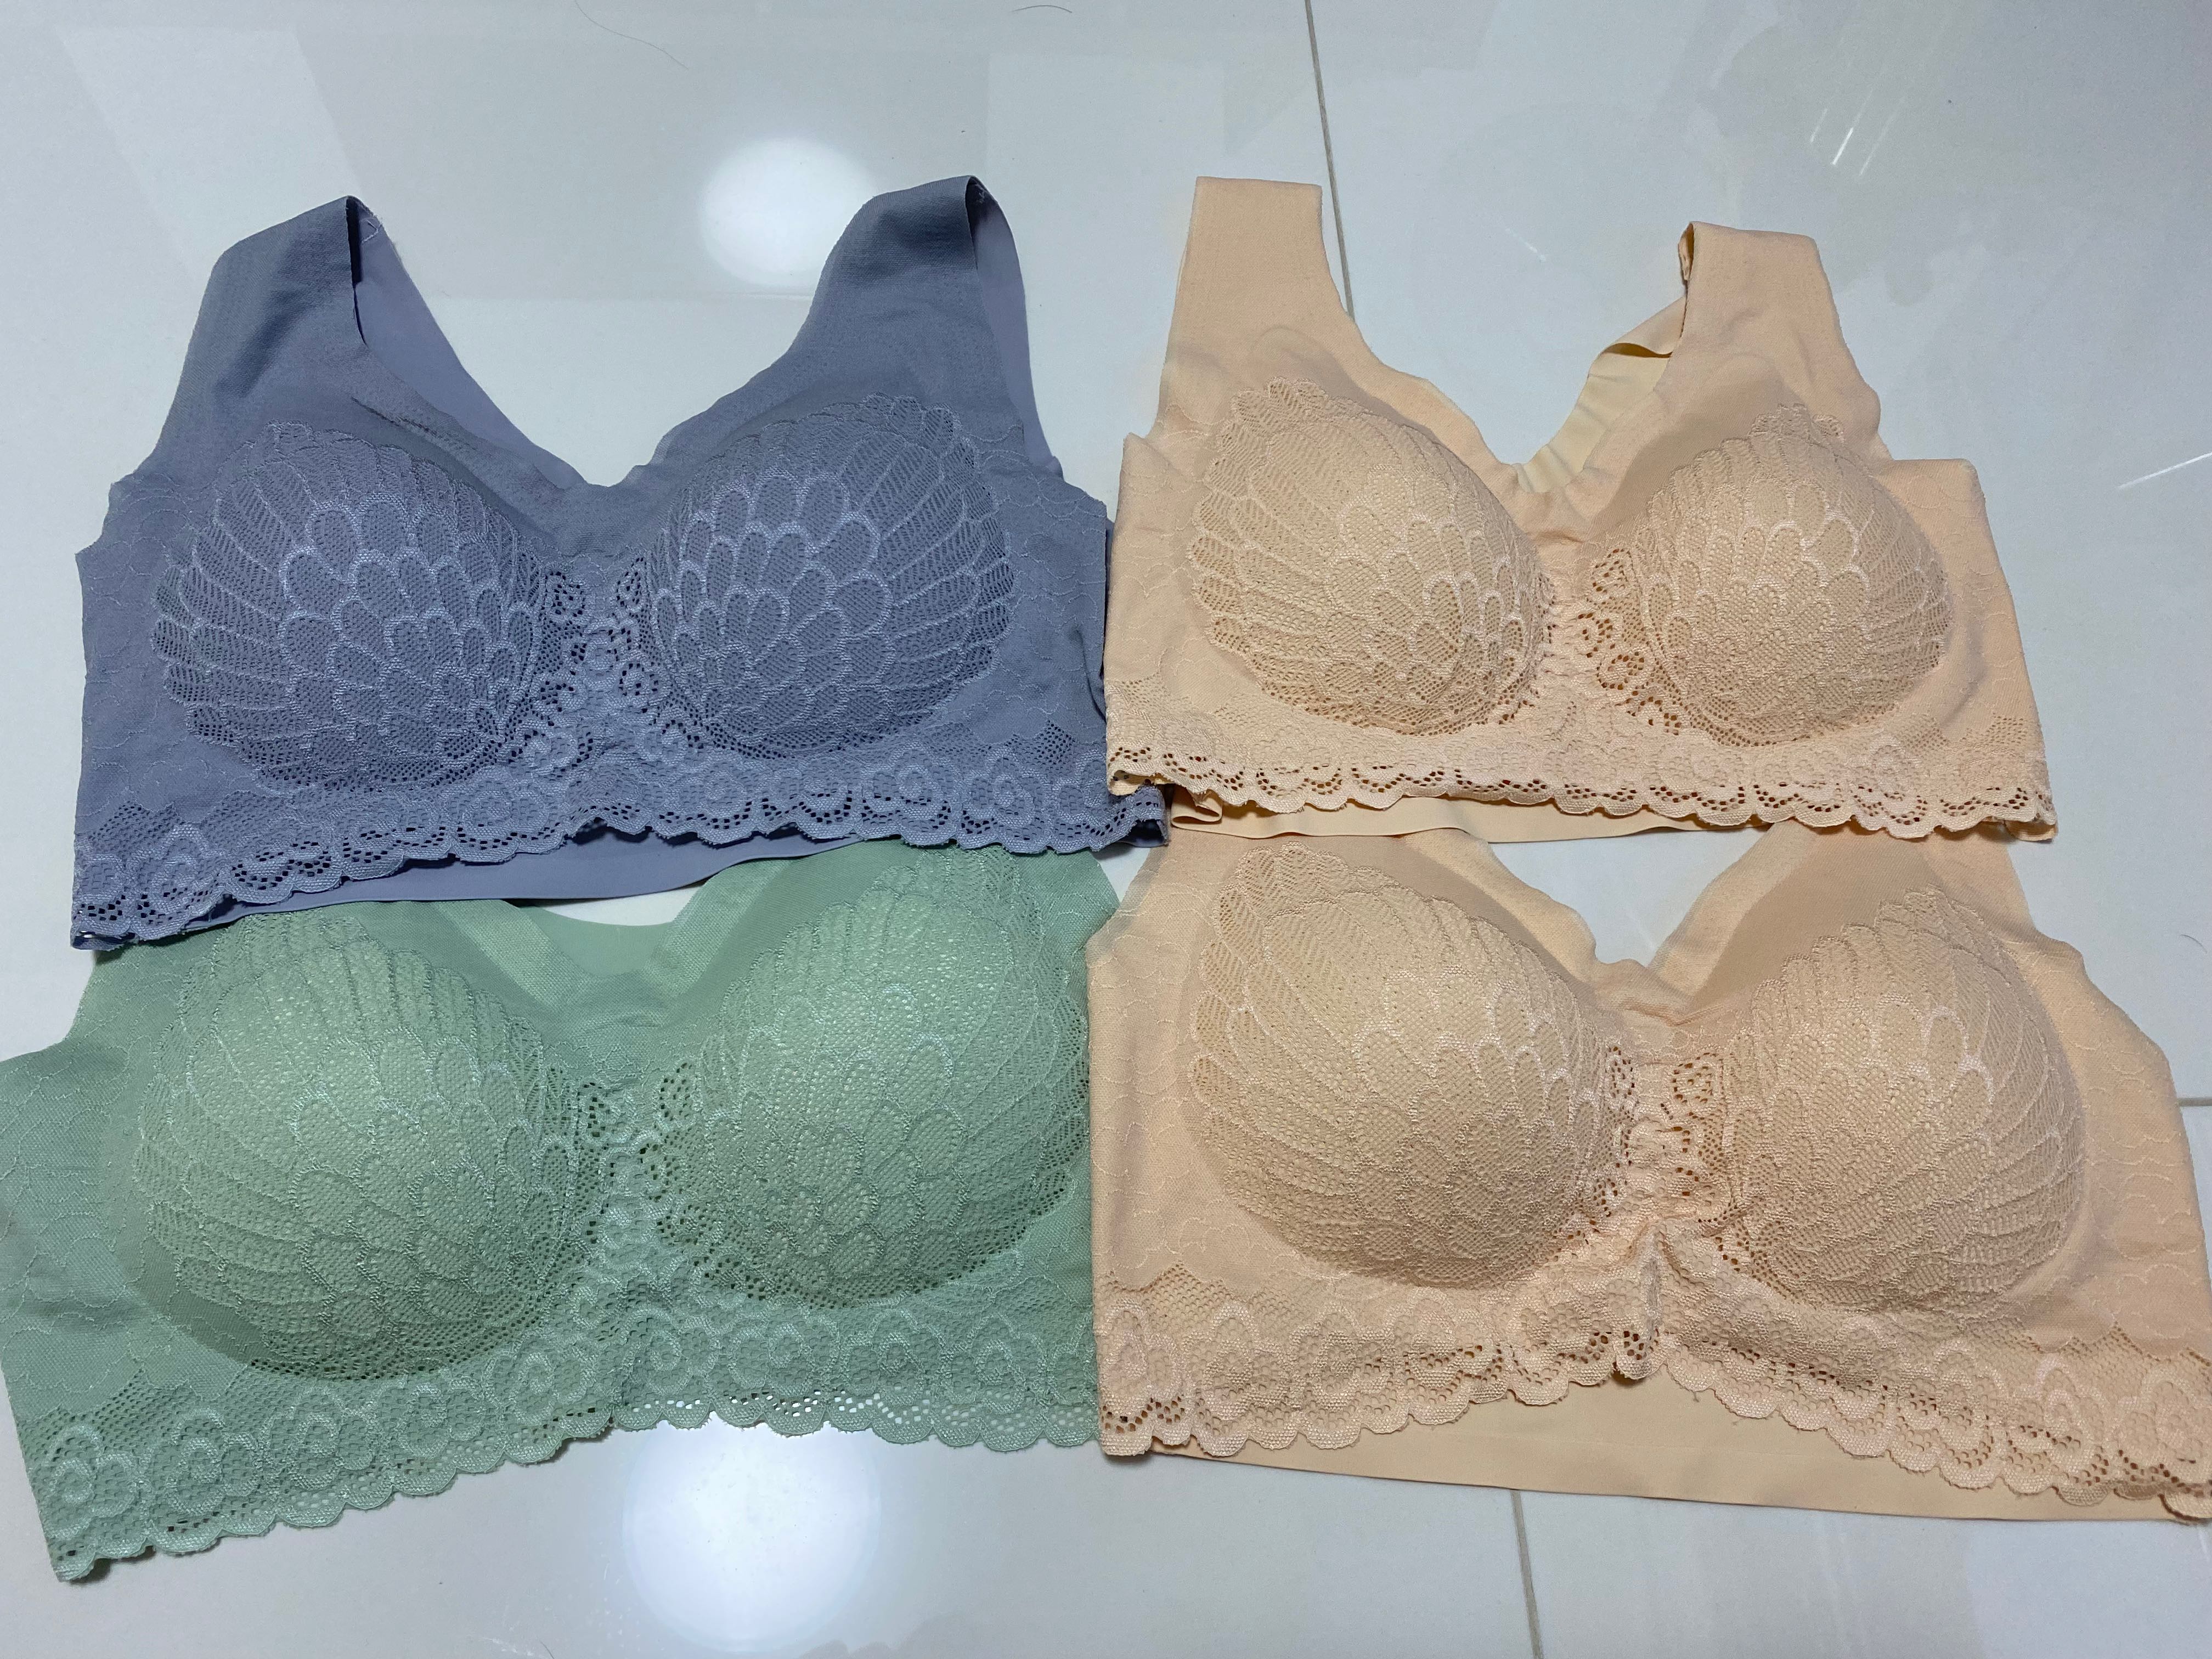 New bras - Size 38C, Women's Fashion, New Undergarments